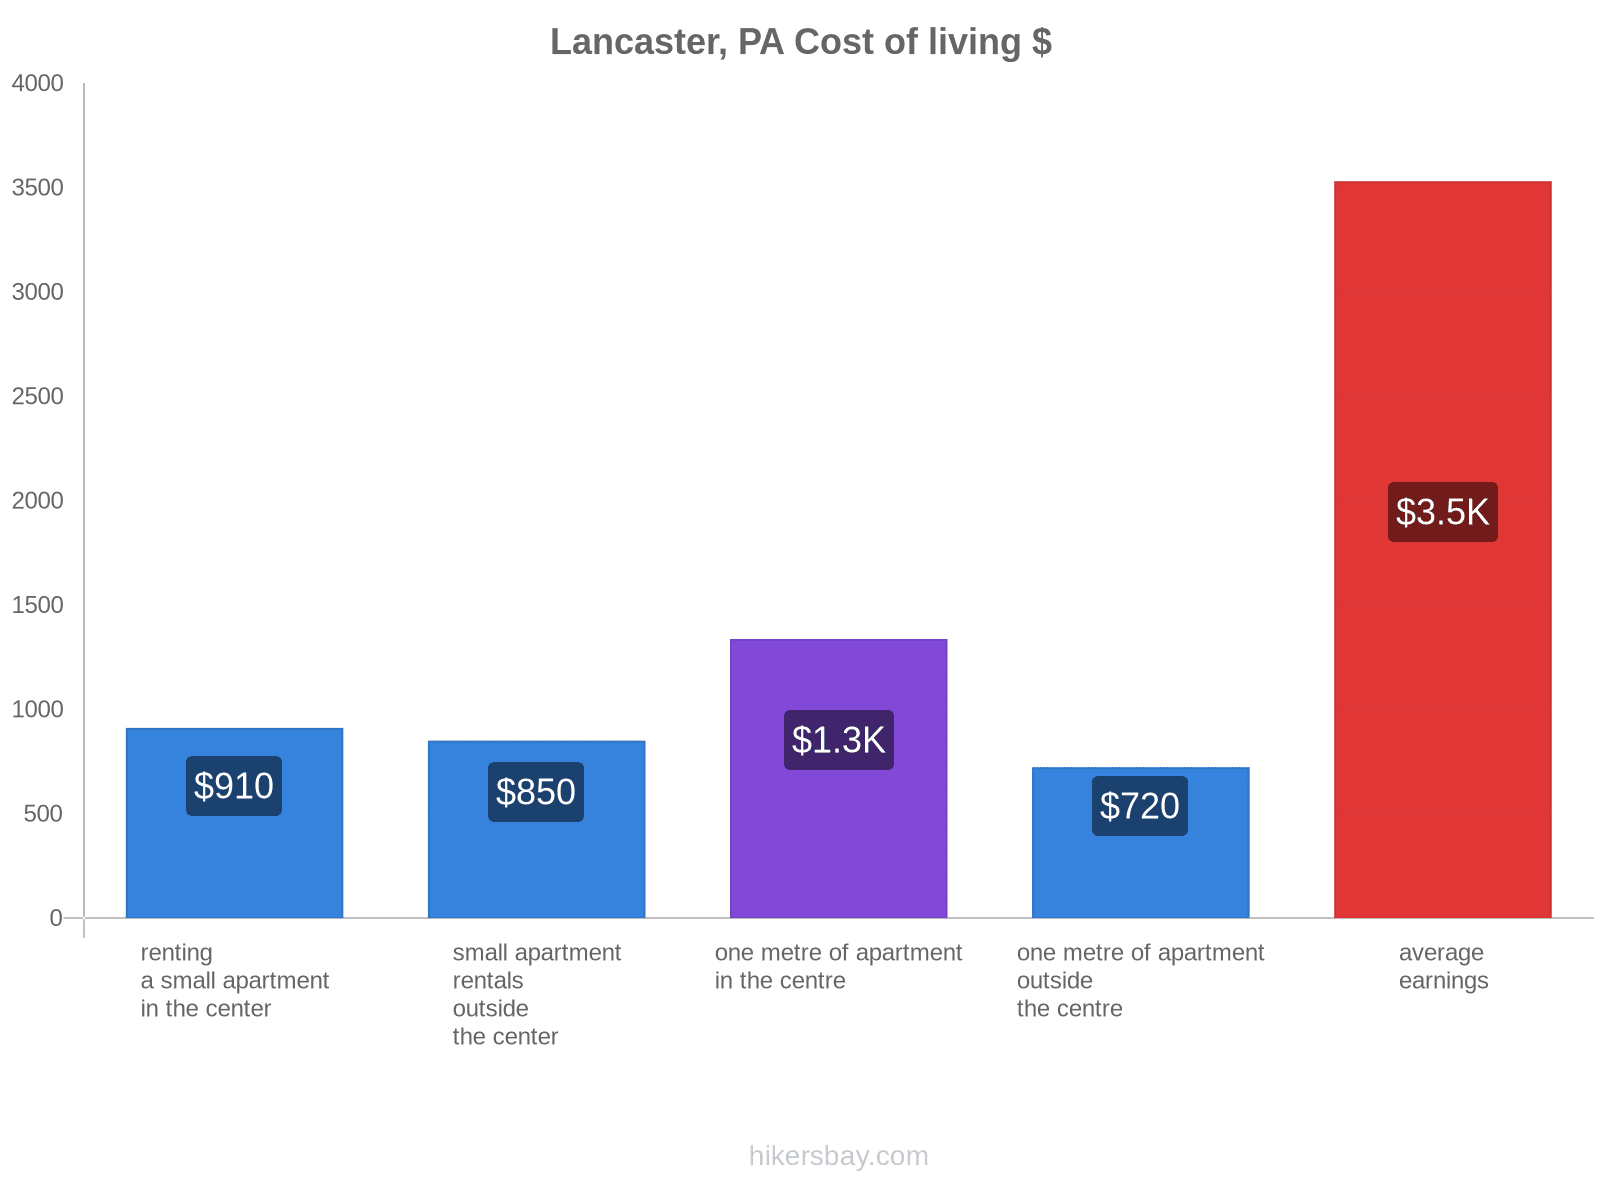 Lancaster, PA cost of living hikersbay.com